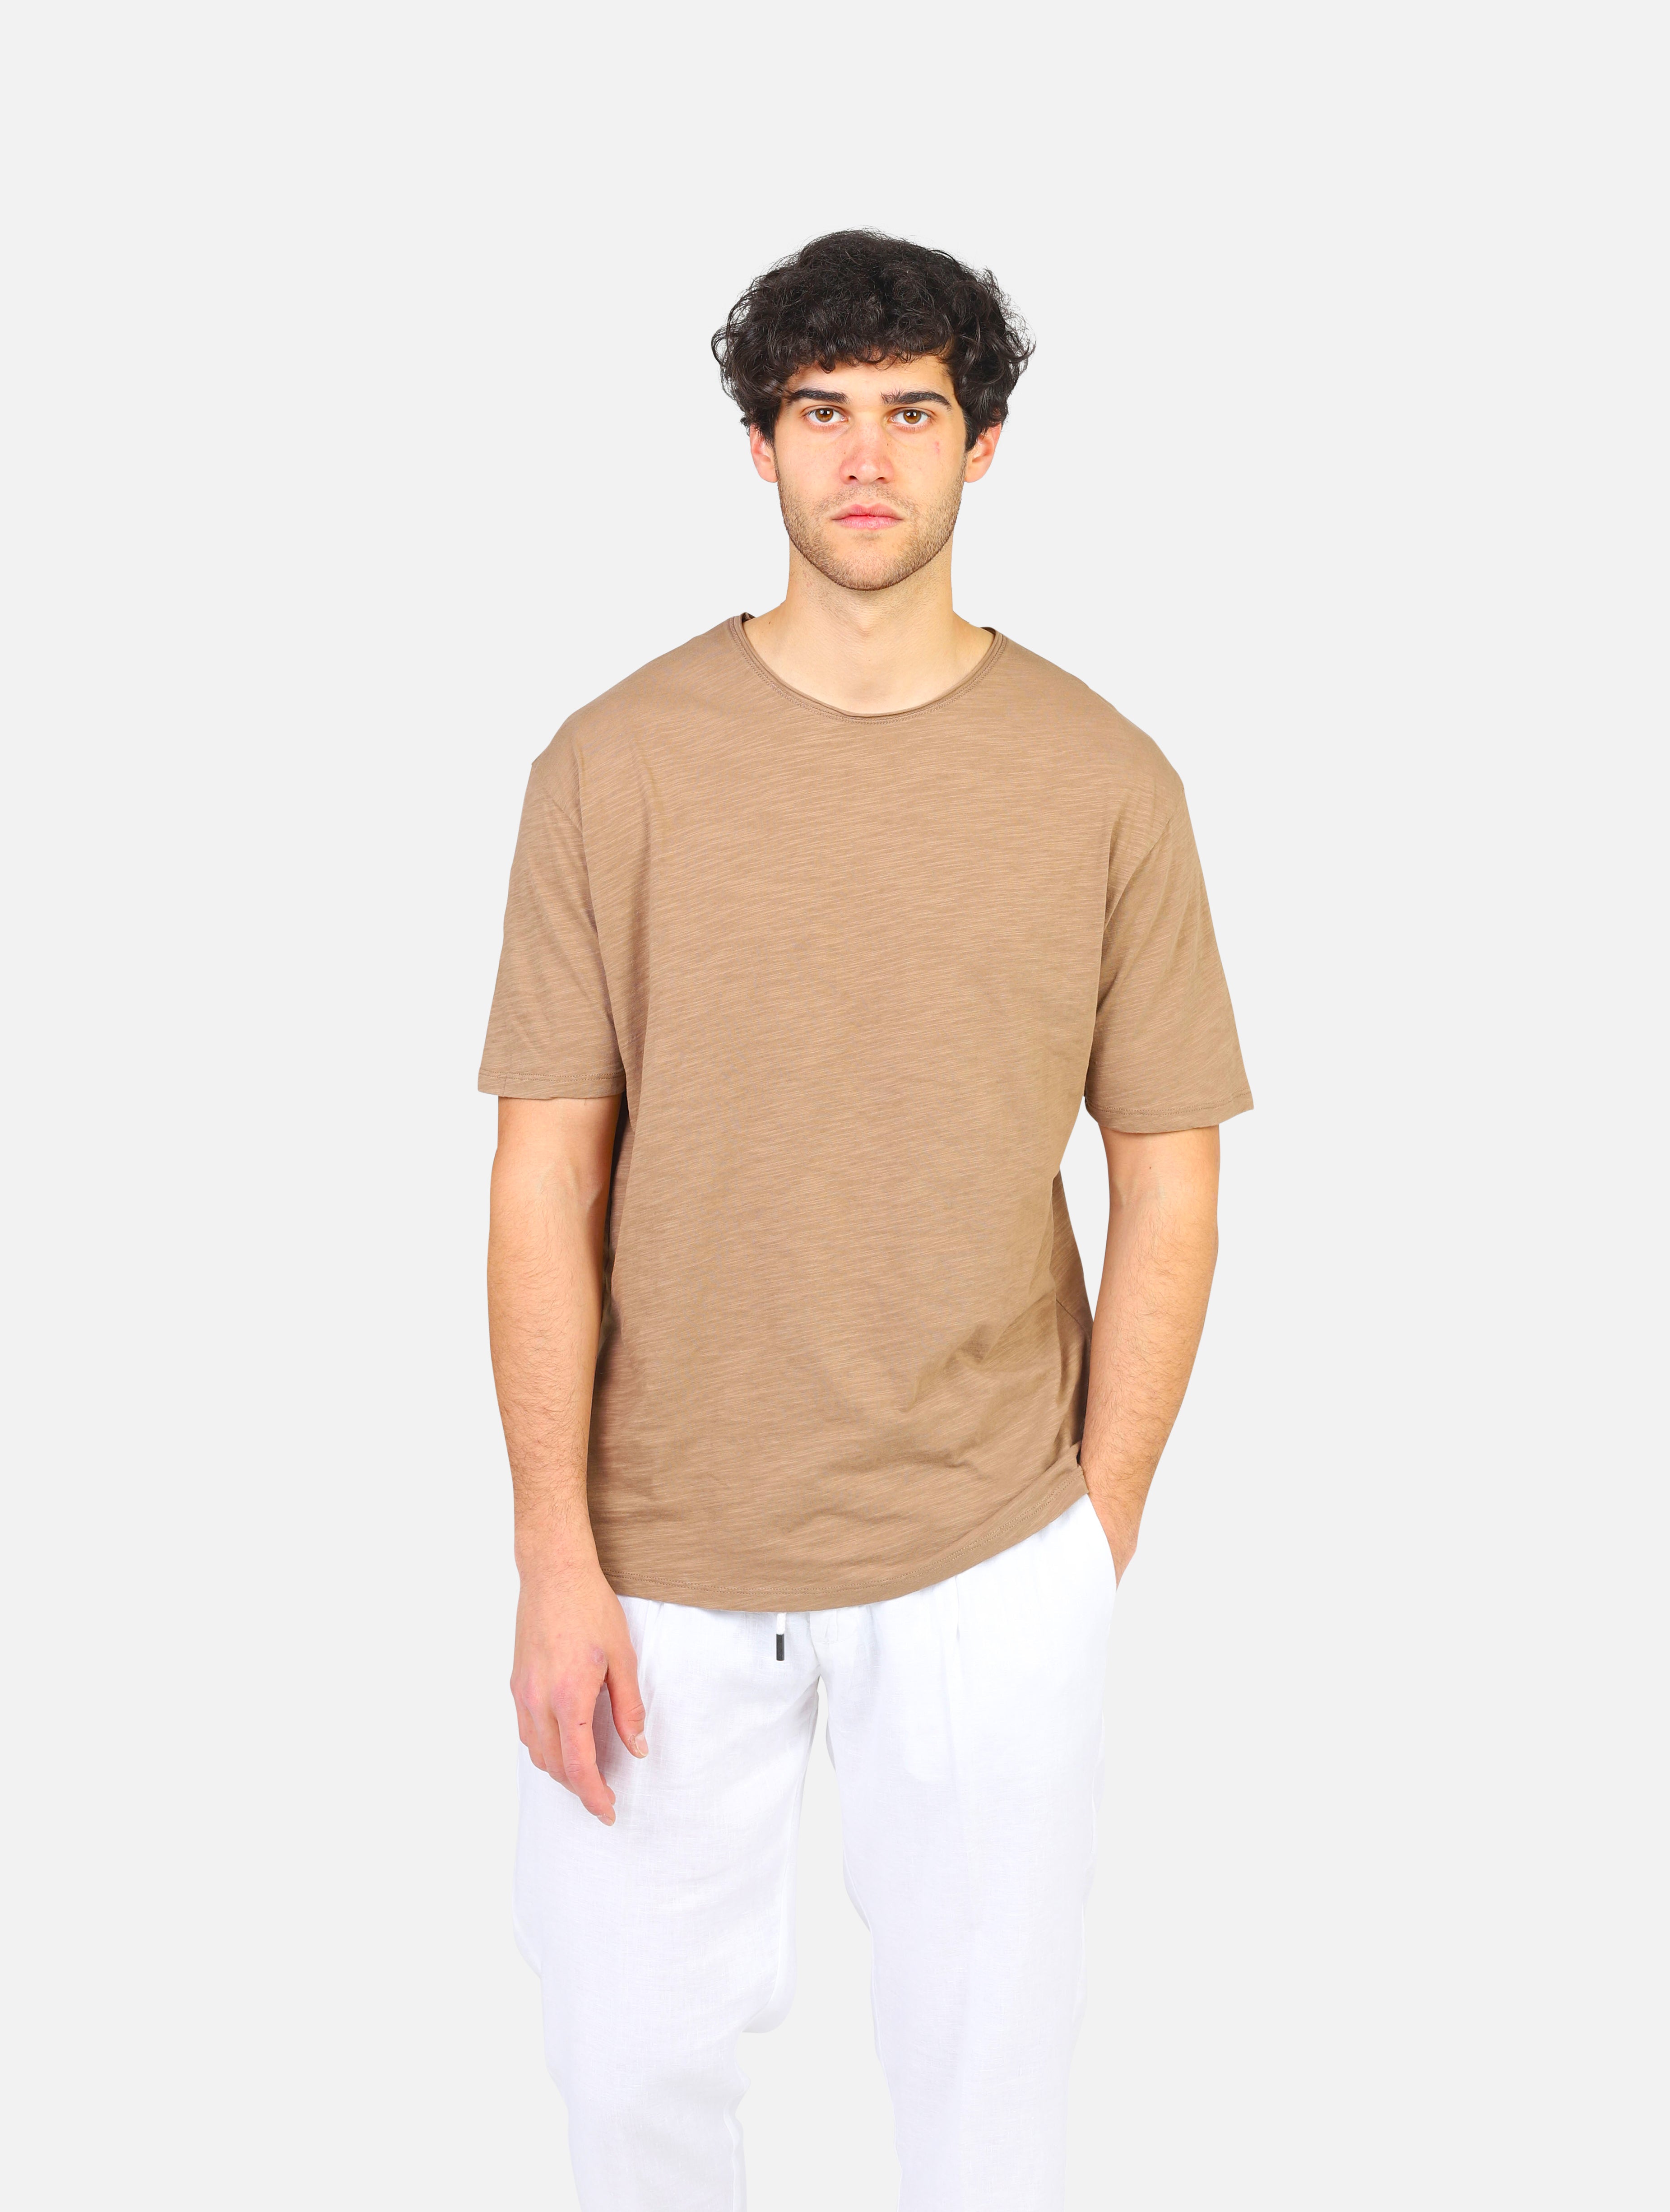 Gianni lupo t-shirt  -  camel uomo  - 1